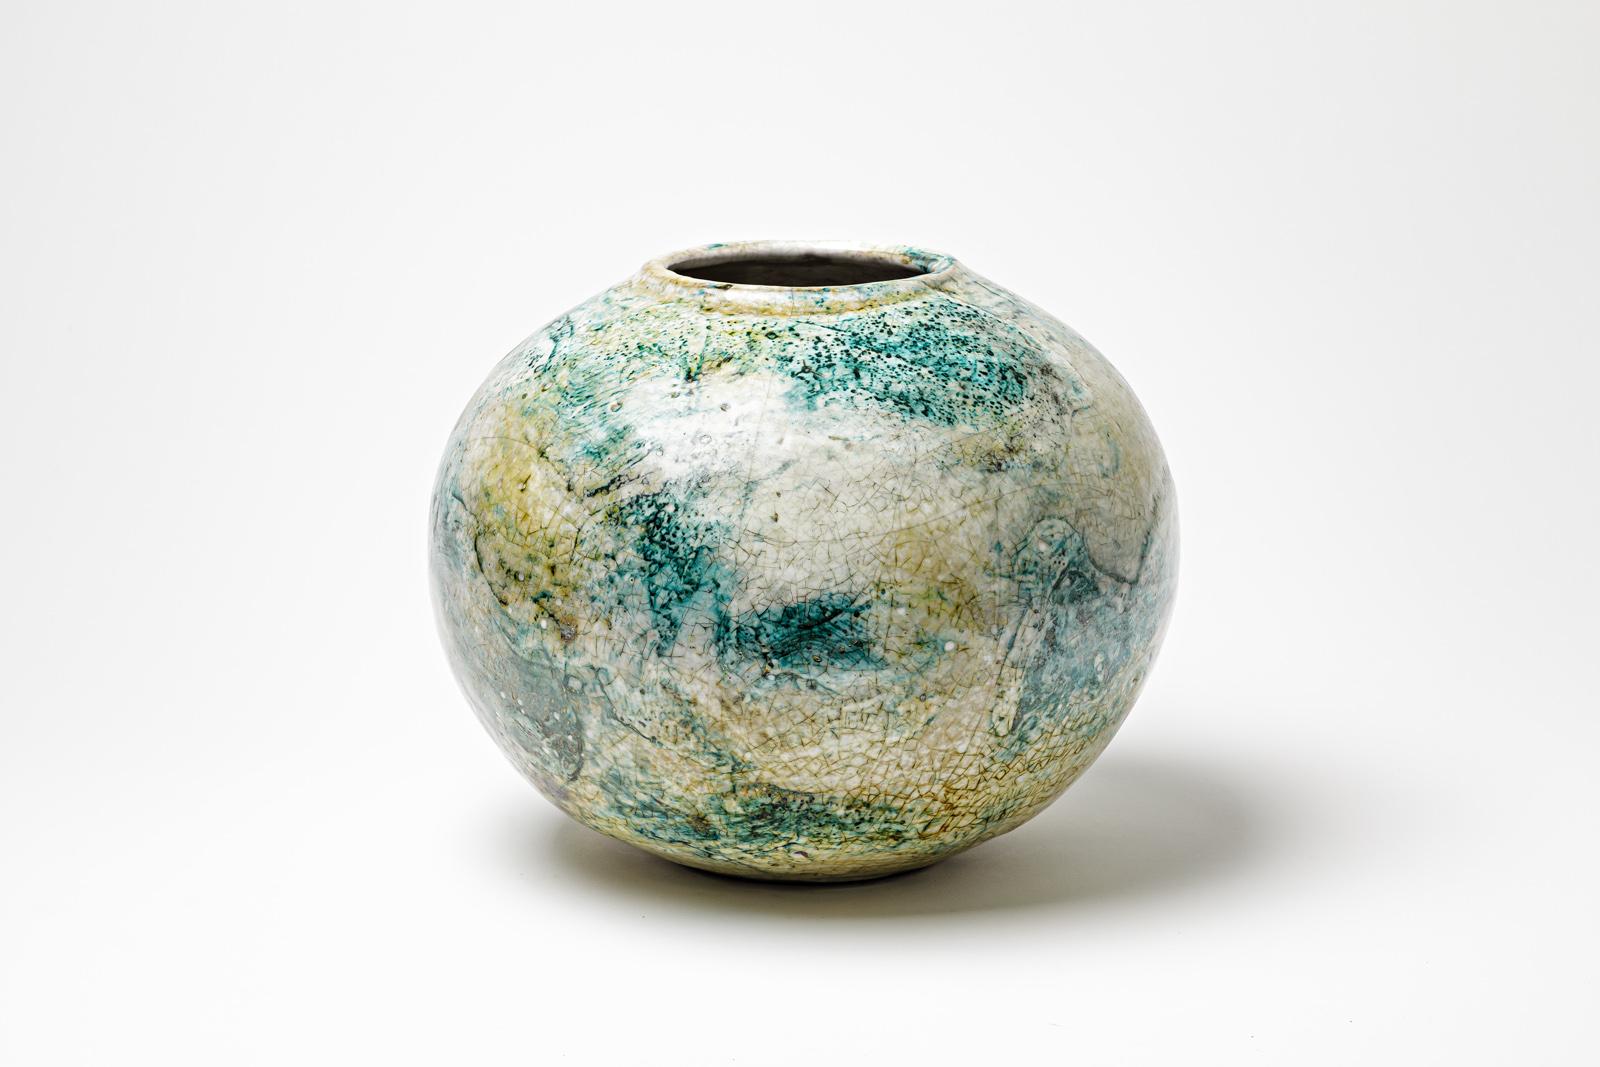 Beaux Arts Green/blue and white glazed ceramic vase by Gisèle Buthod Garçon, circa 1980-90 For Sale